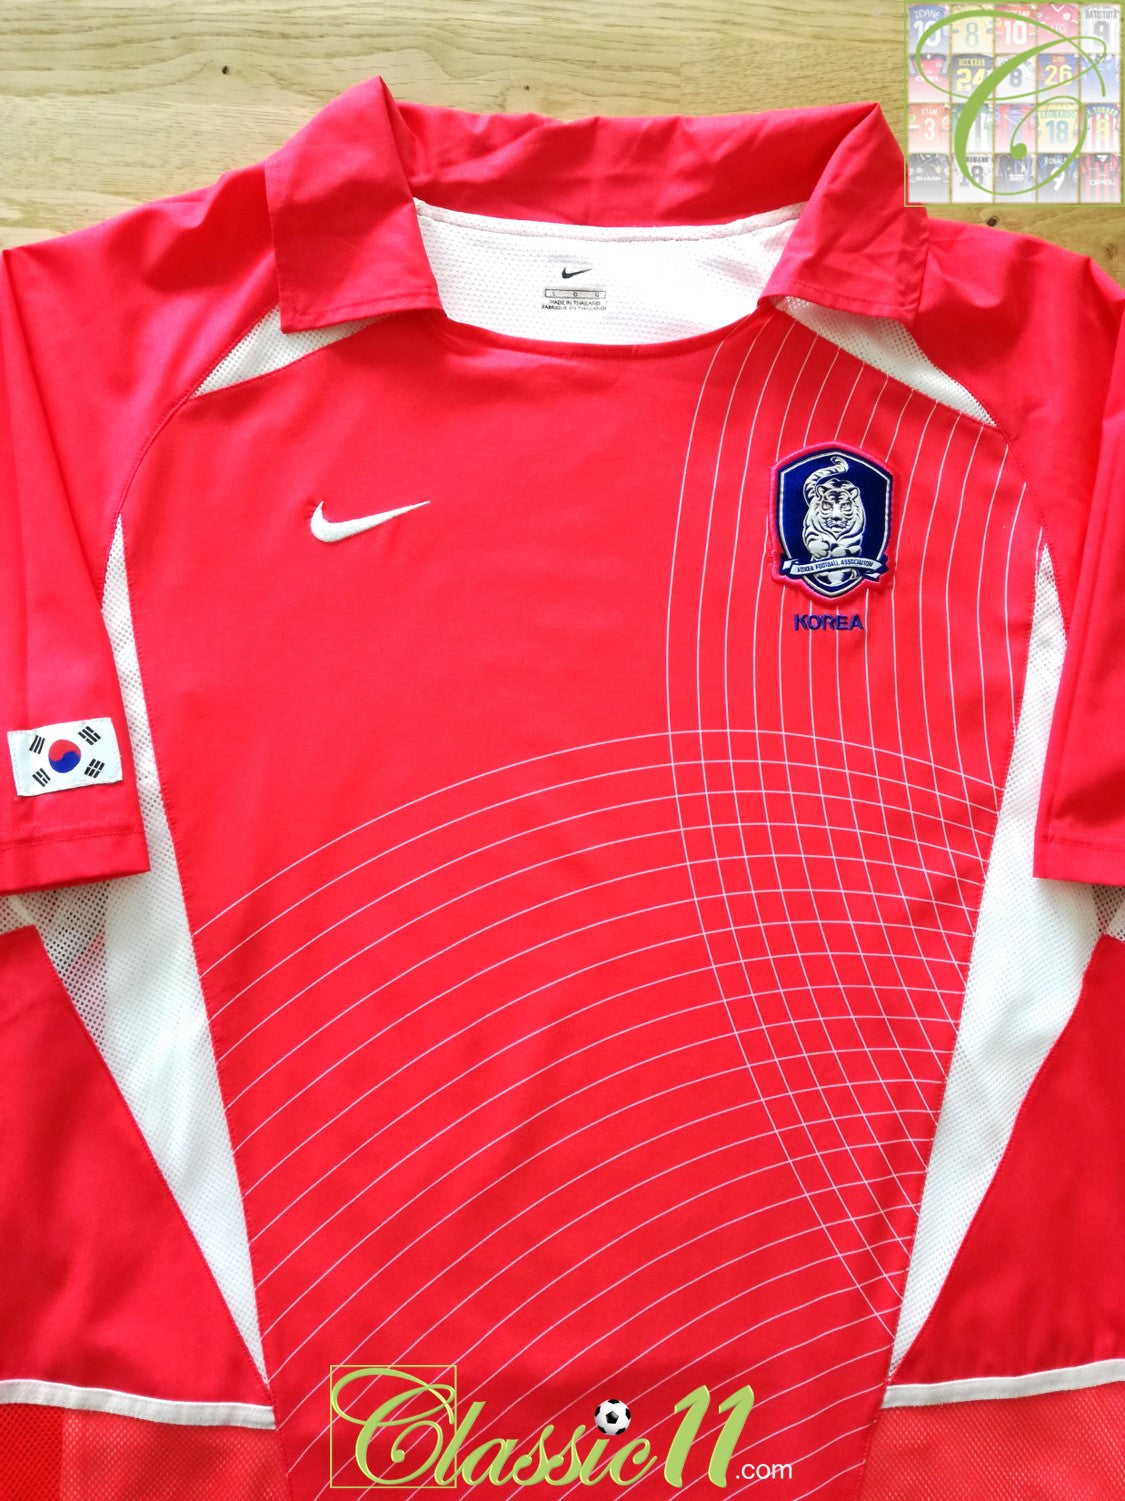 south korea world cup 2002 jersey